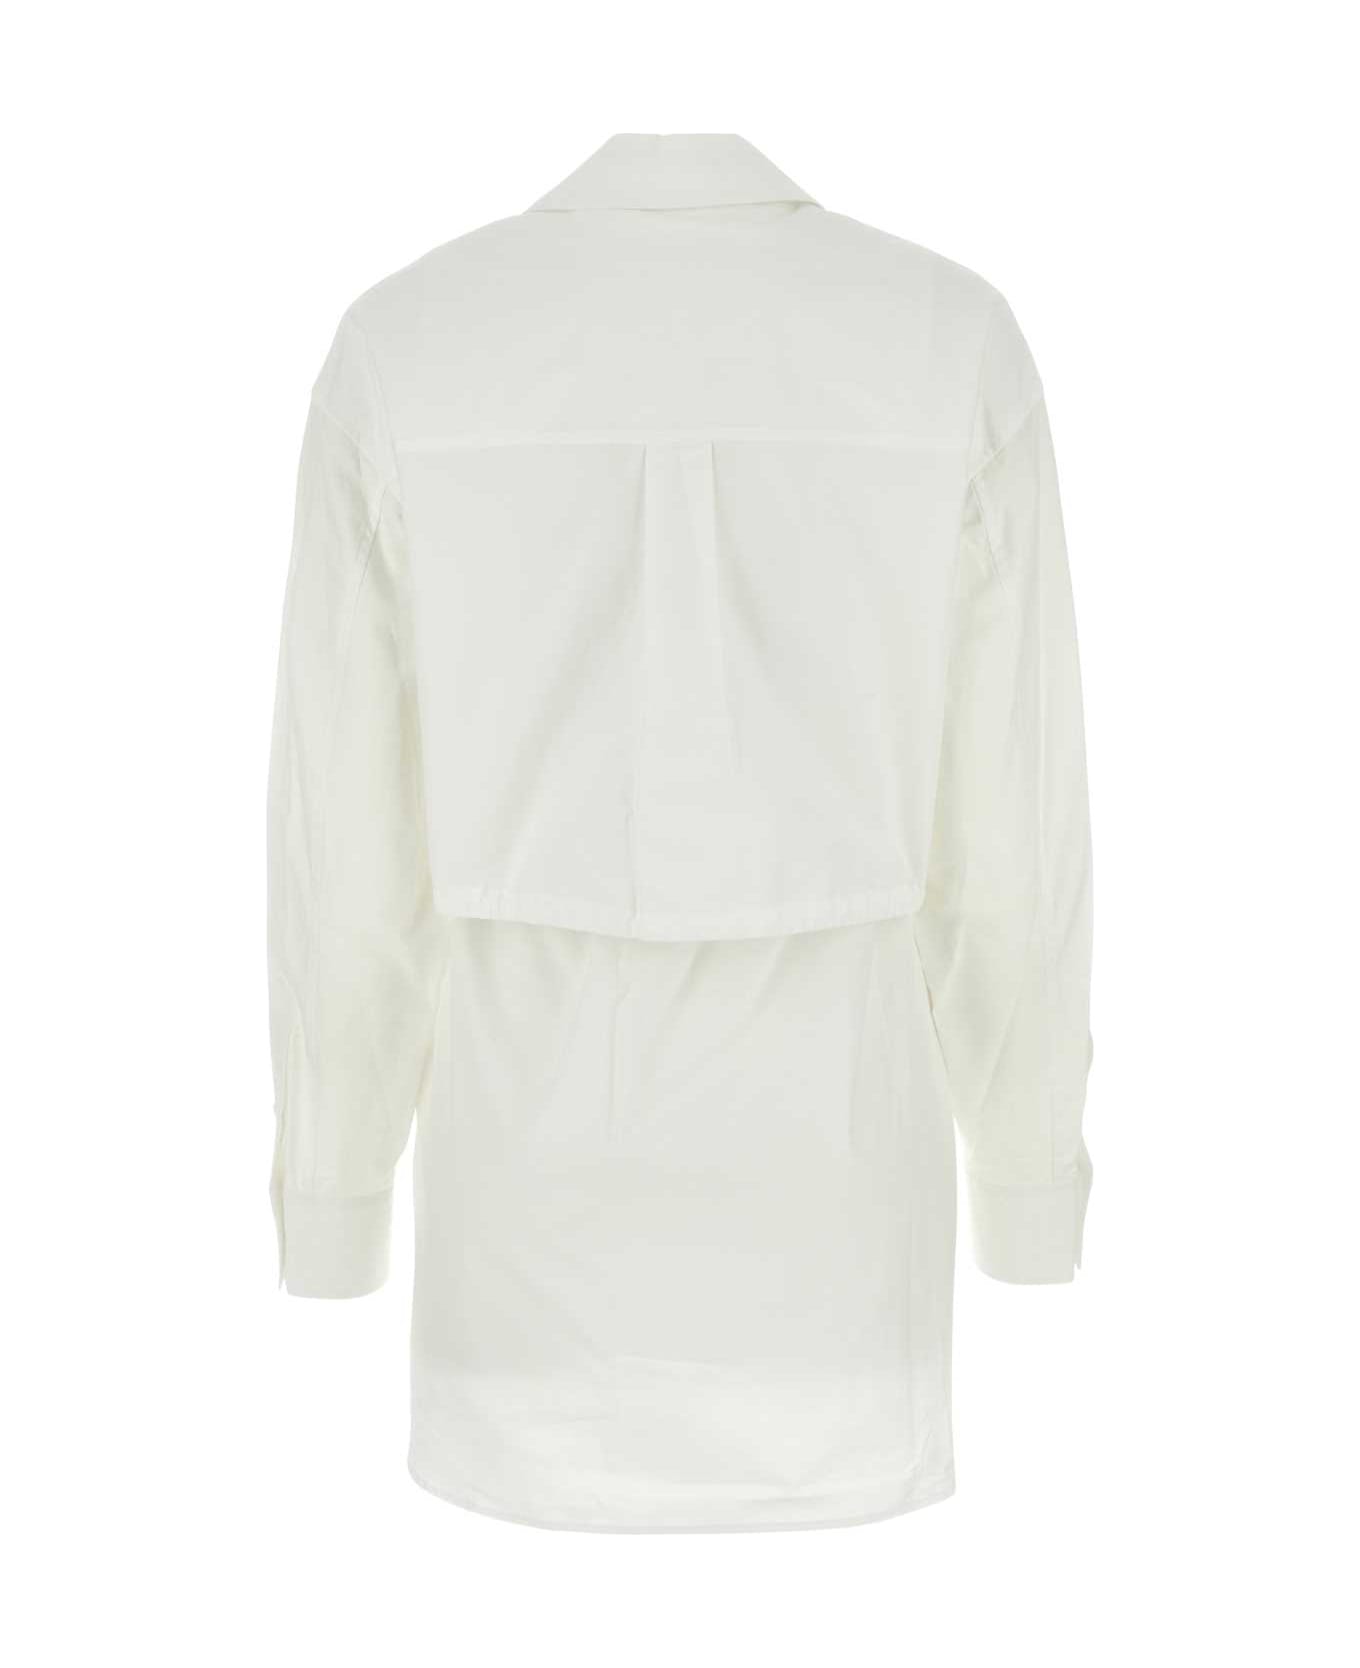 T by Alexander Wang White Poplin Shirt Dress - White